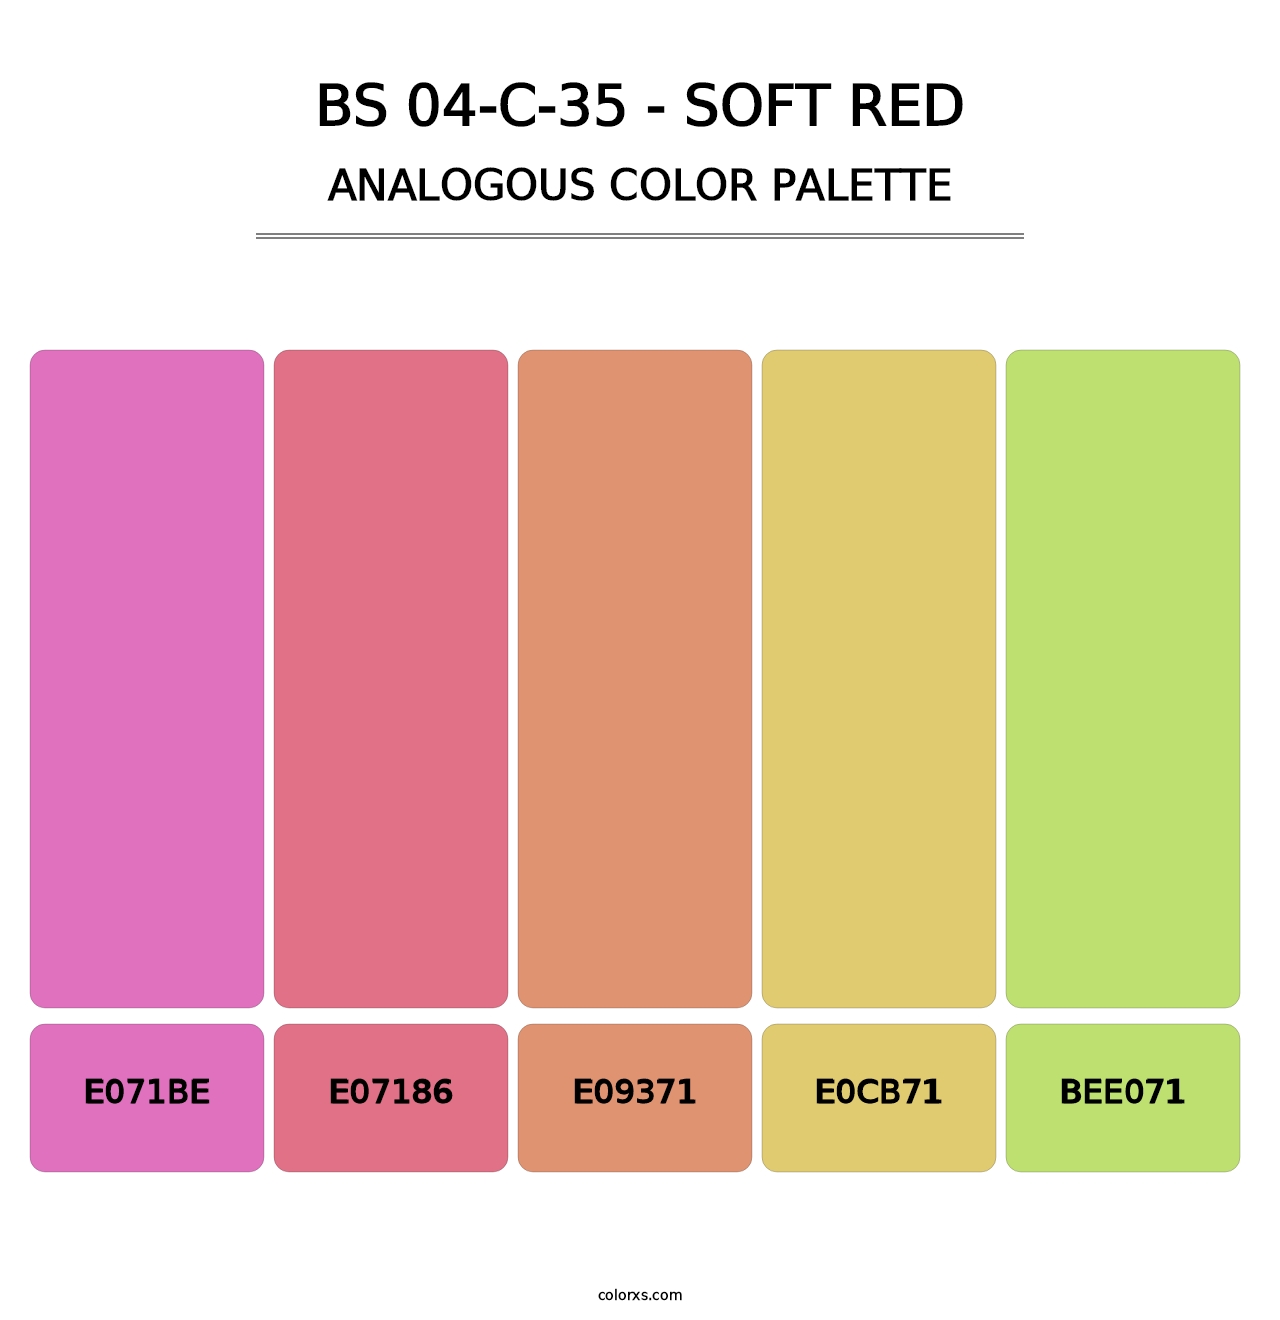 BS 04-C-35 - Soft Red - Analogous Color Palette